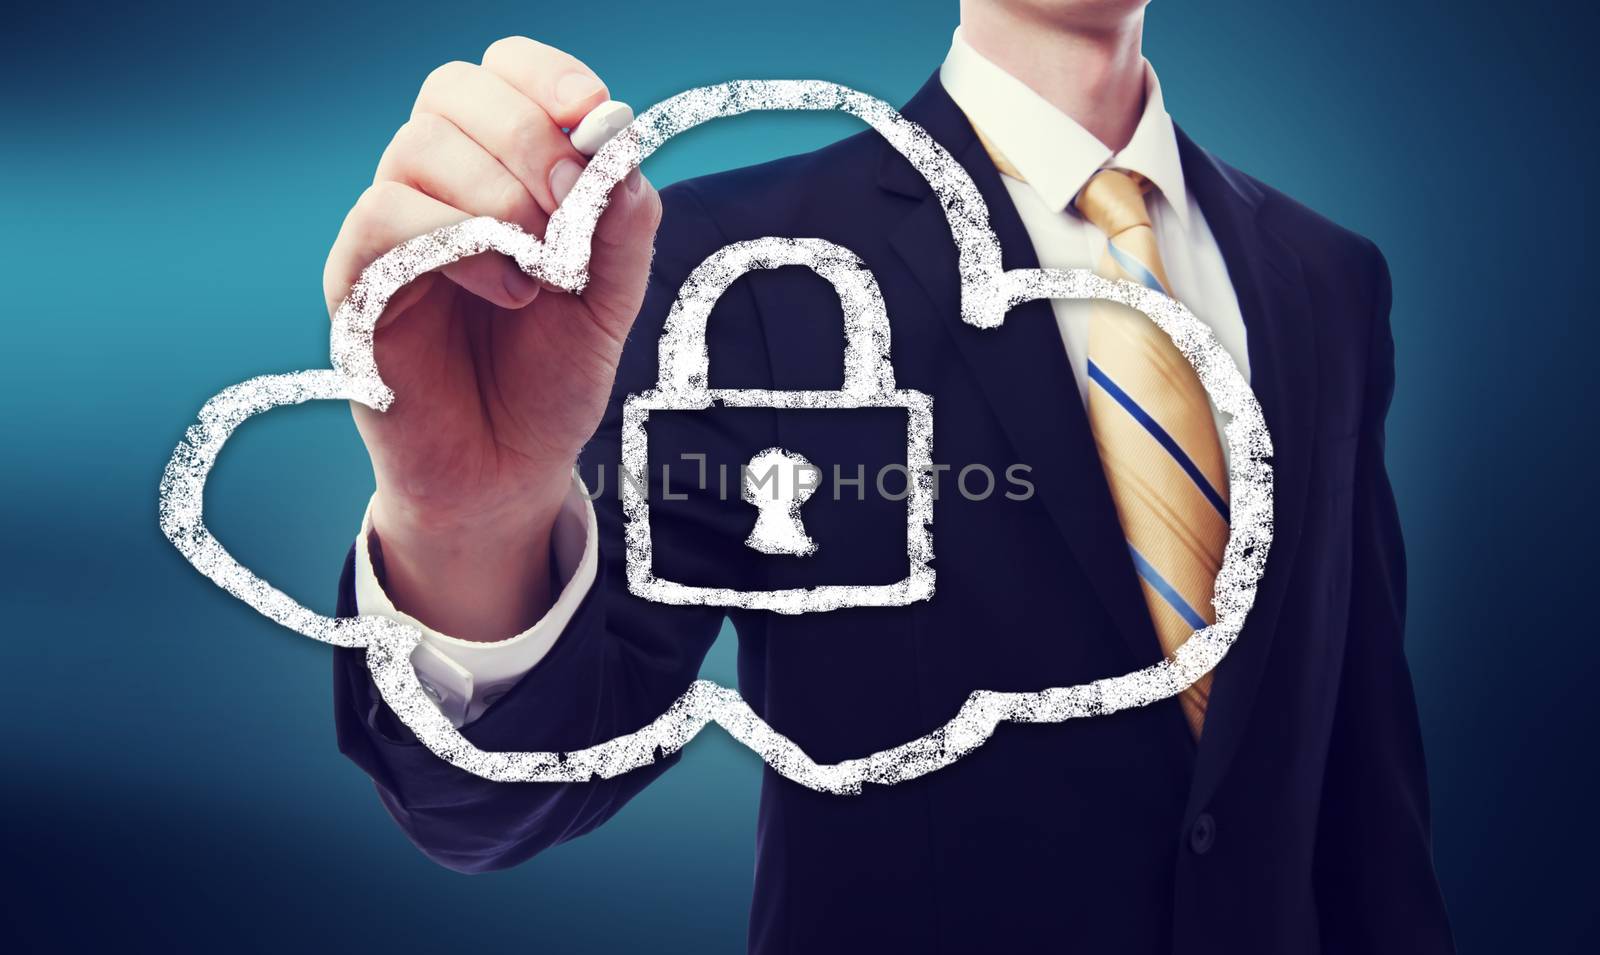 Secured Cloud Computing by melpomene